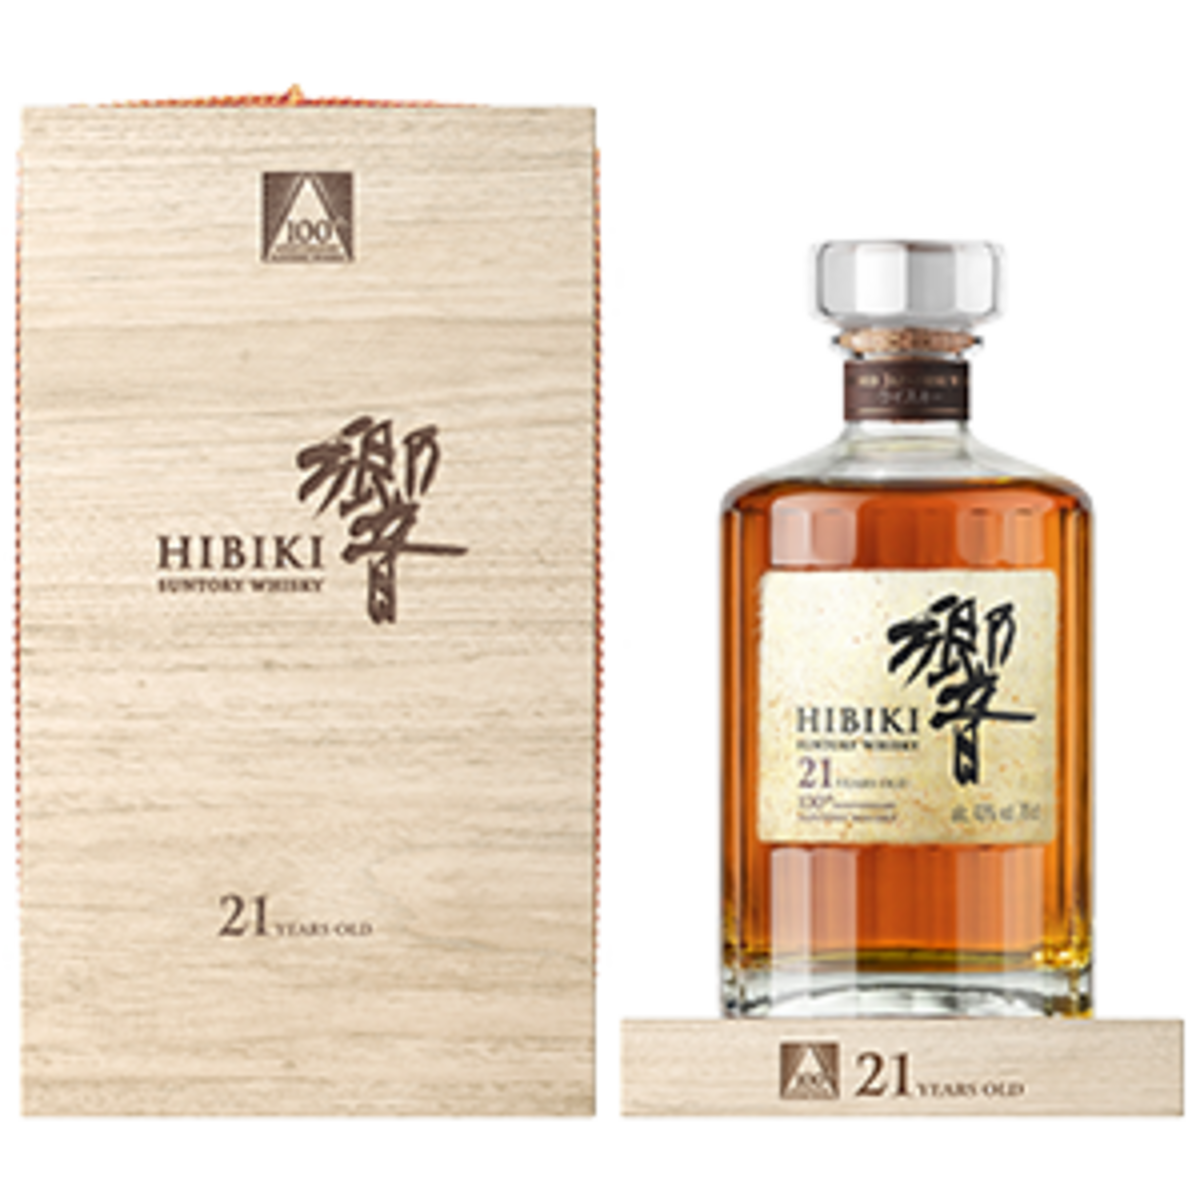 Hibiki 21 year old Mizunara 100th Anniversary Limited Edition Review